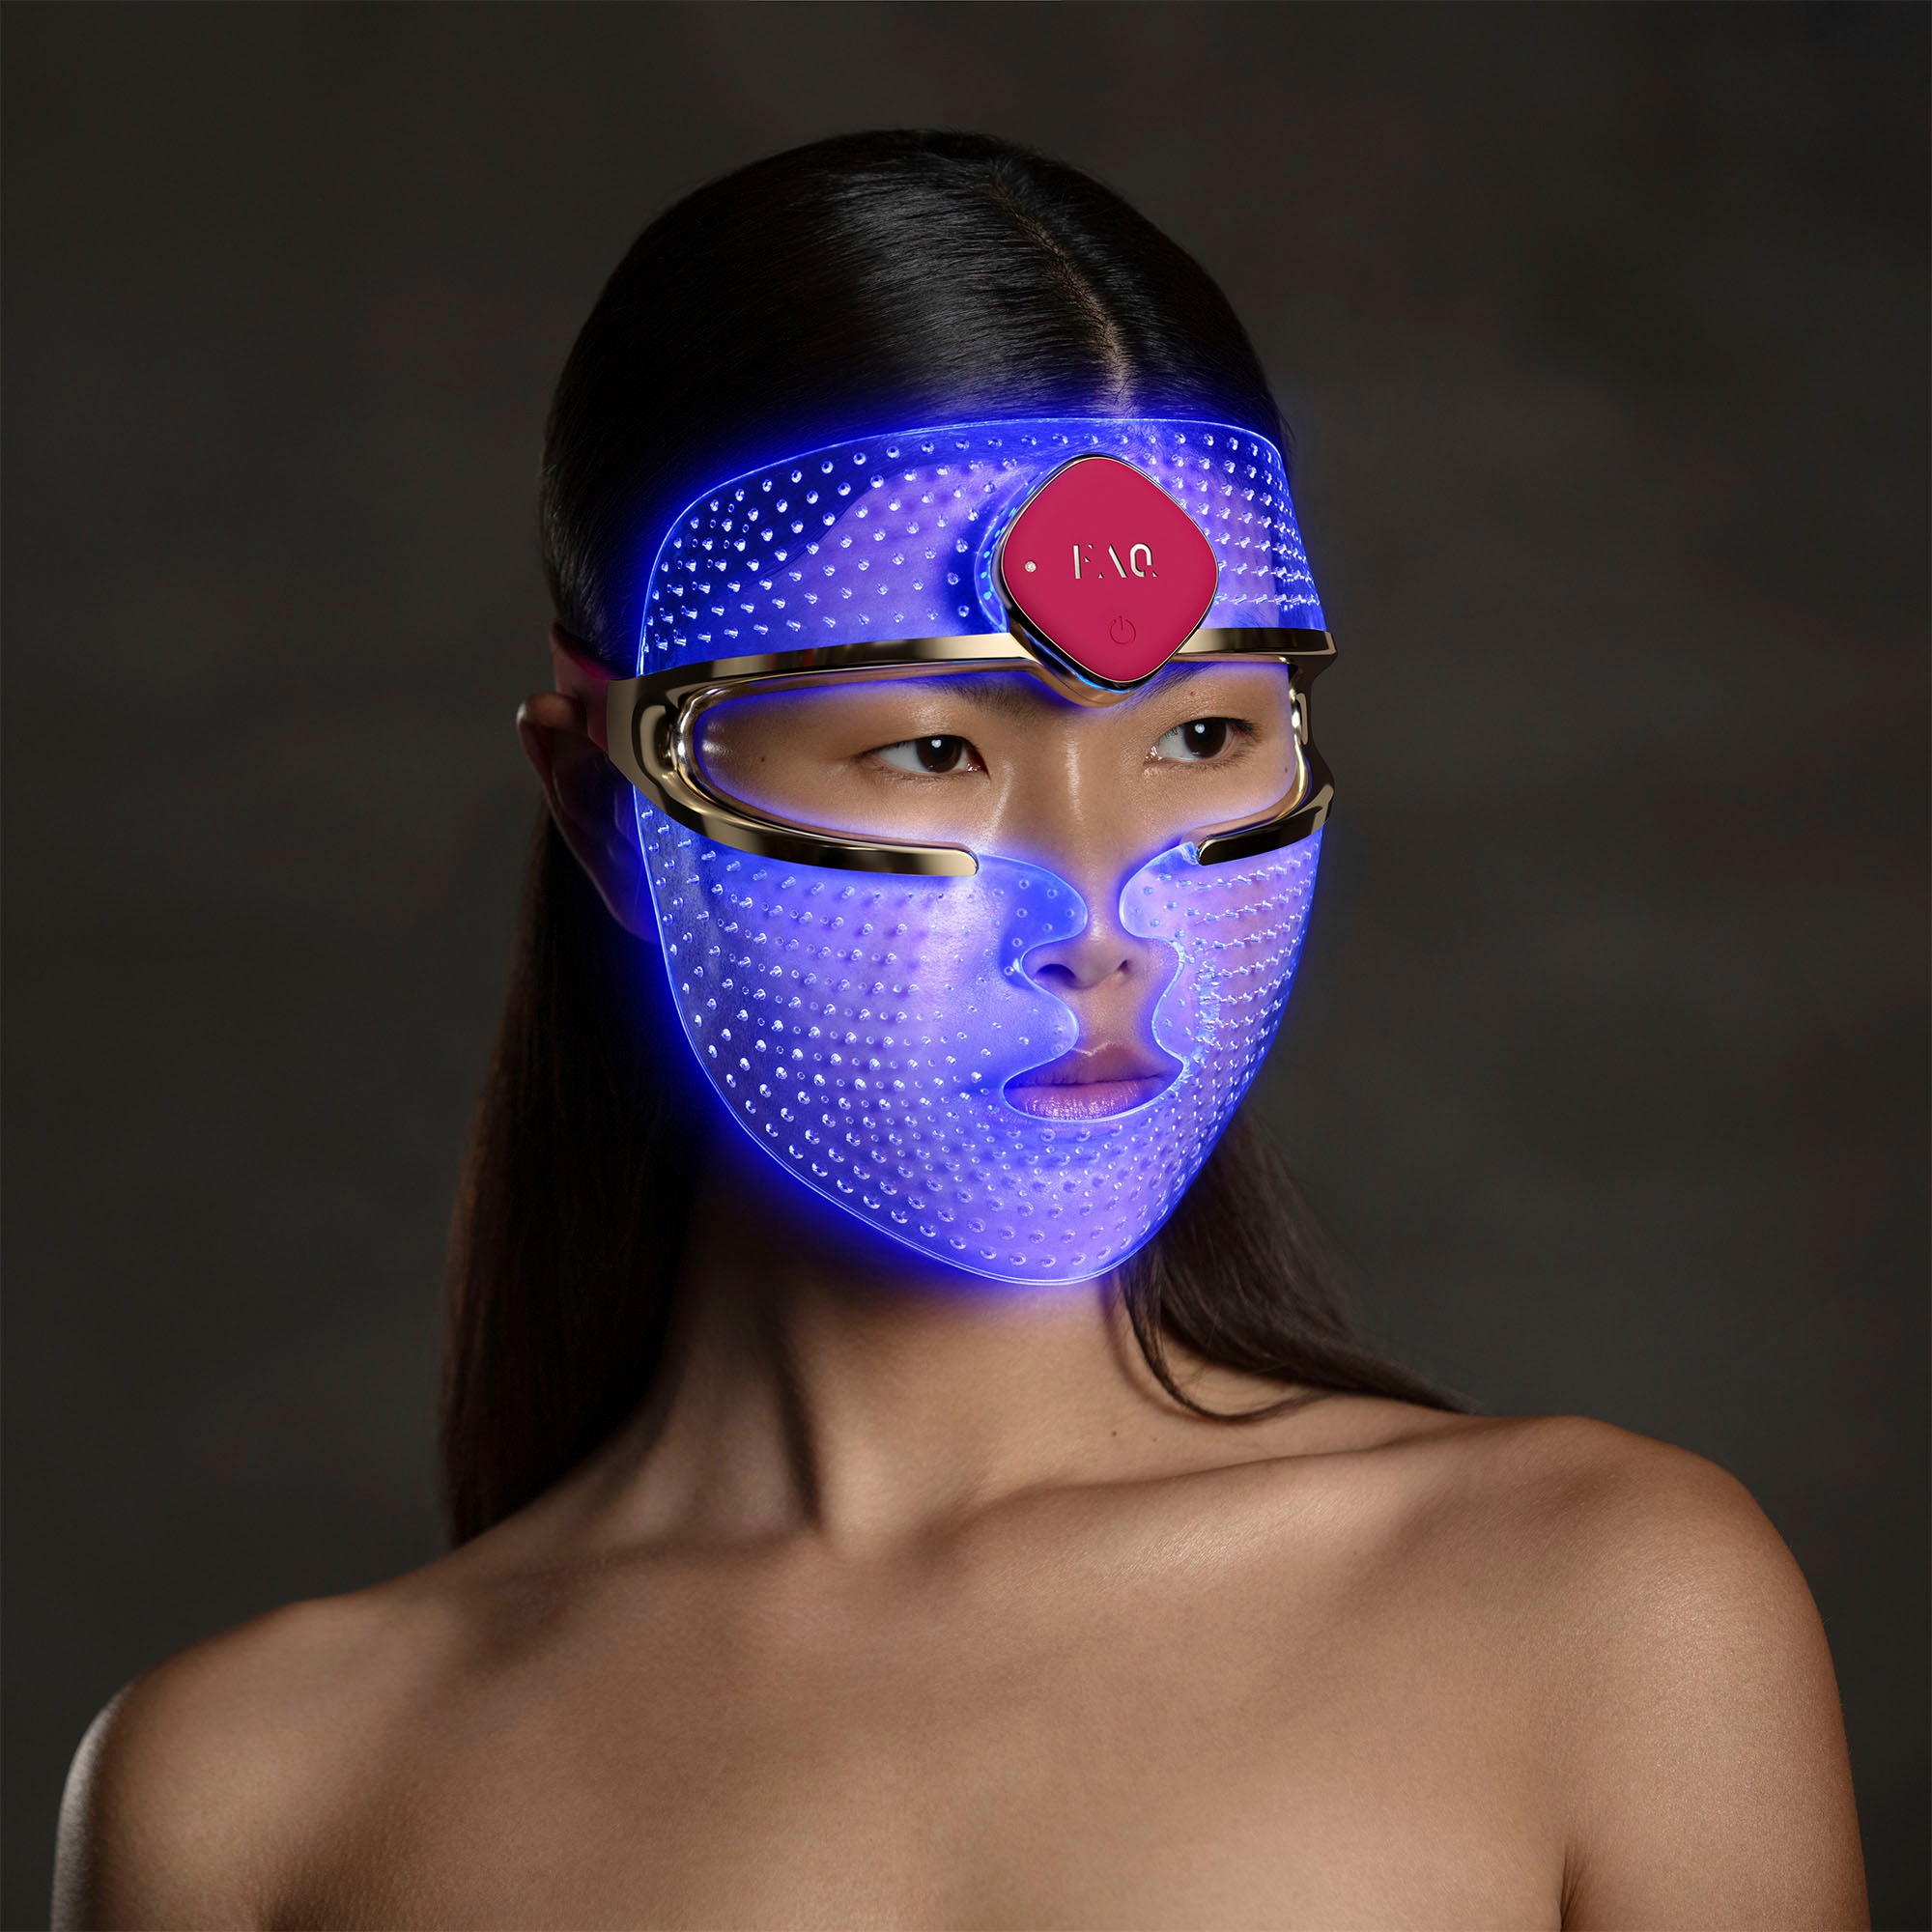 FAQ™ Mikrodermabrasionsgerät »FAQ™ Gesichtsmaske Face LED Mask«, 3 jetzt OTTO kaufen bei mit LED Farben Silicone 201